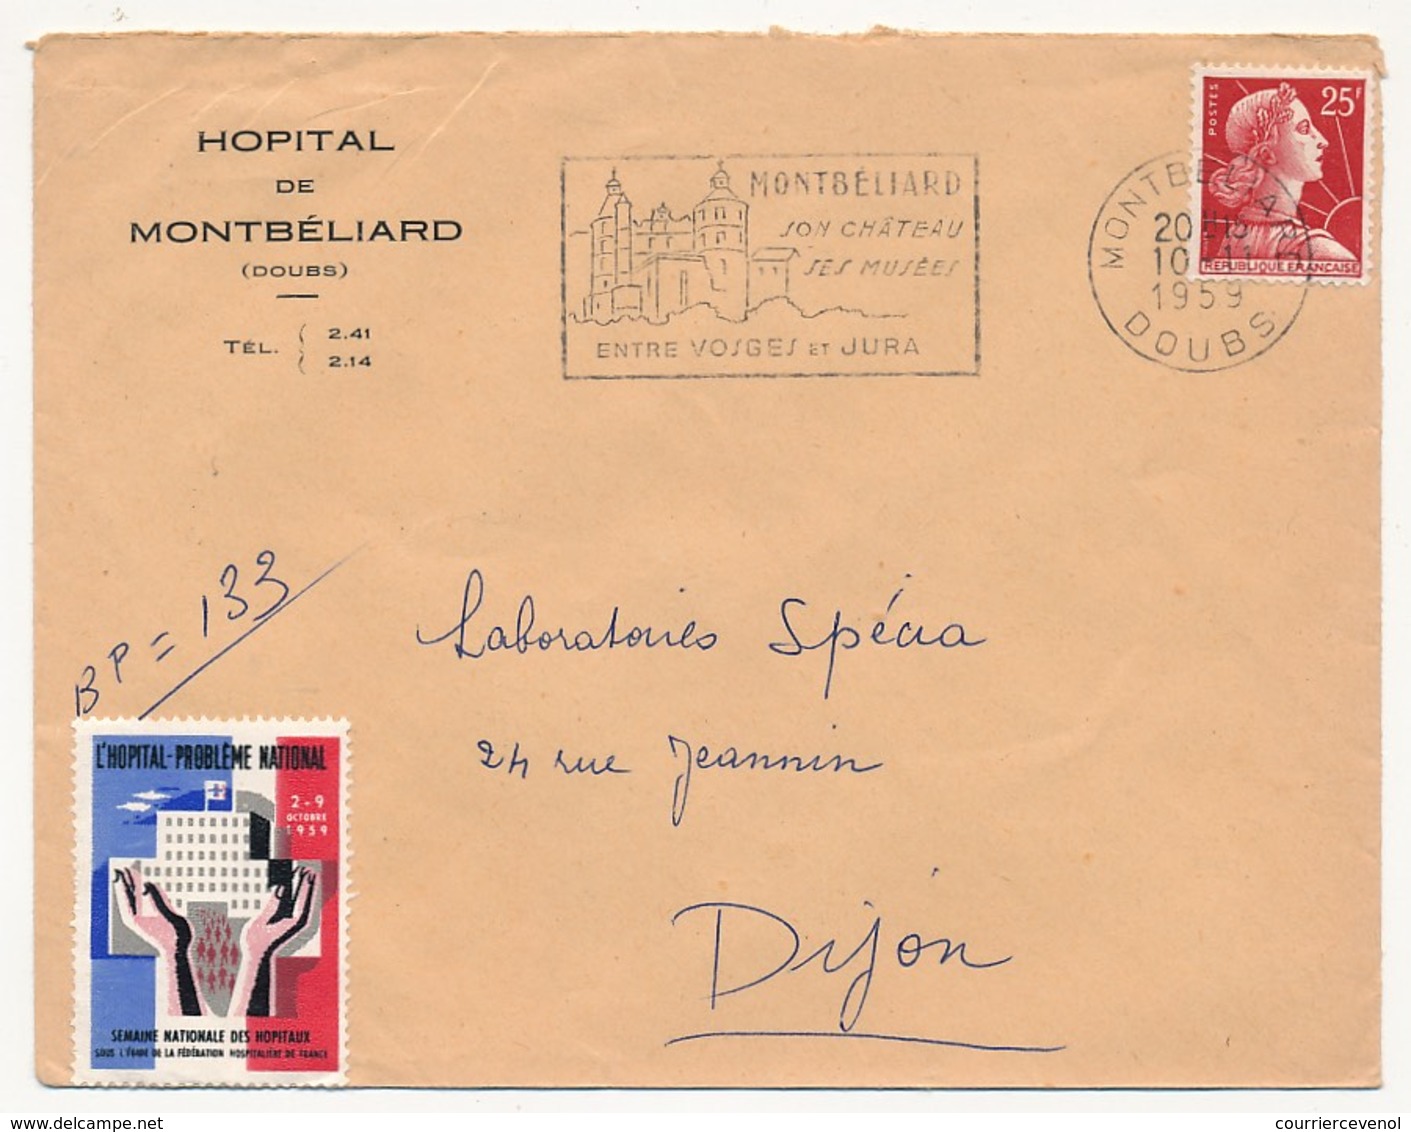 FRANCE - Enveloppe Affr 25F Muller Avec Vignette "L'Hopital Problème National" - Hopital De Montbéliard (Doubs) 1959 - Briefe U. Dokumente